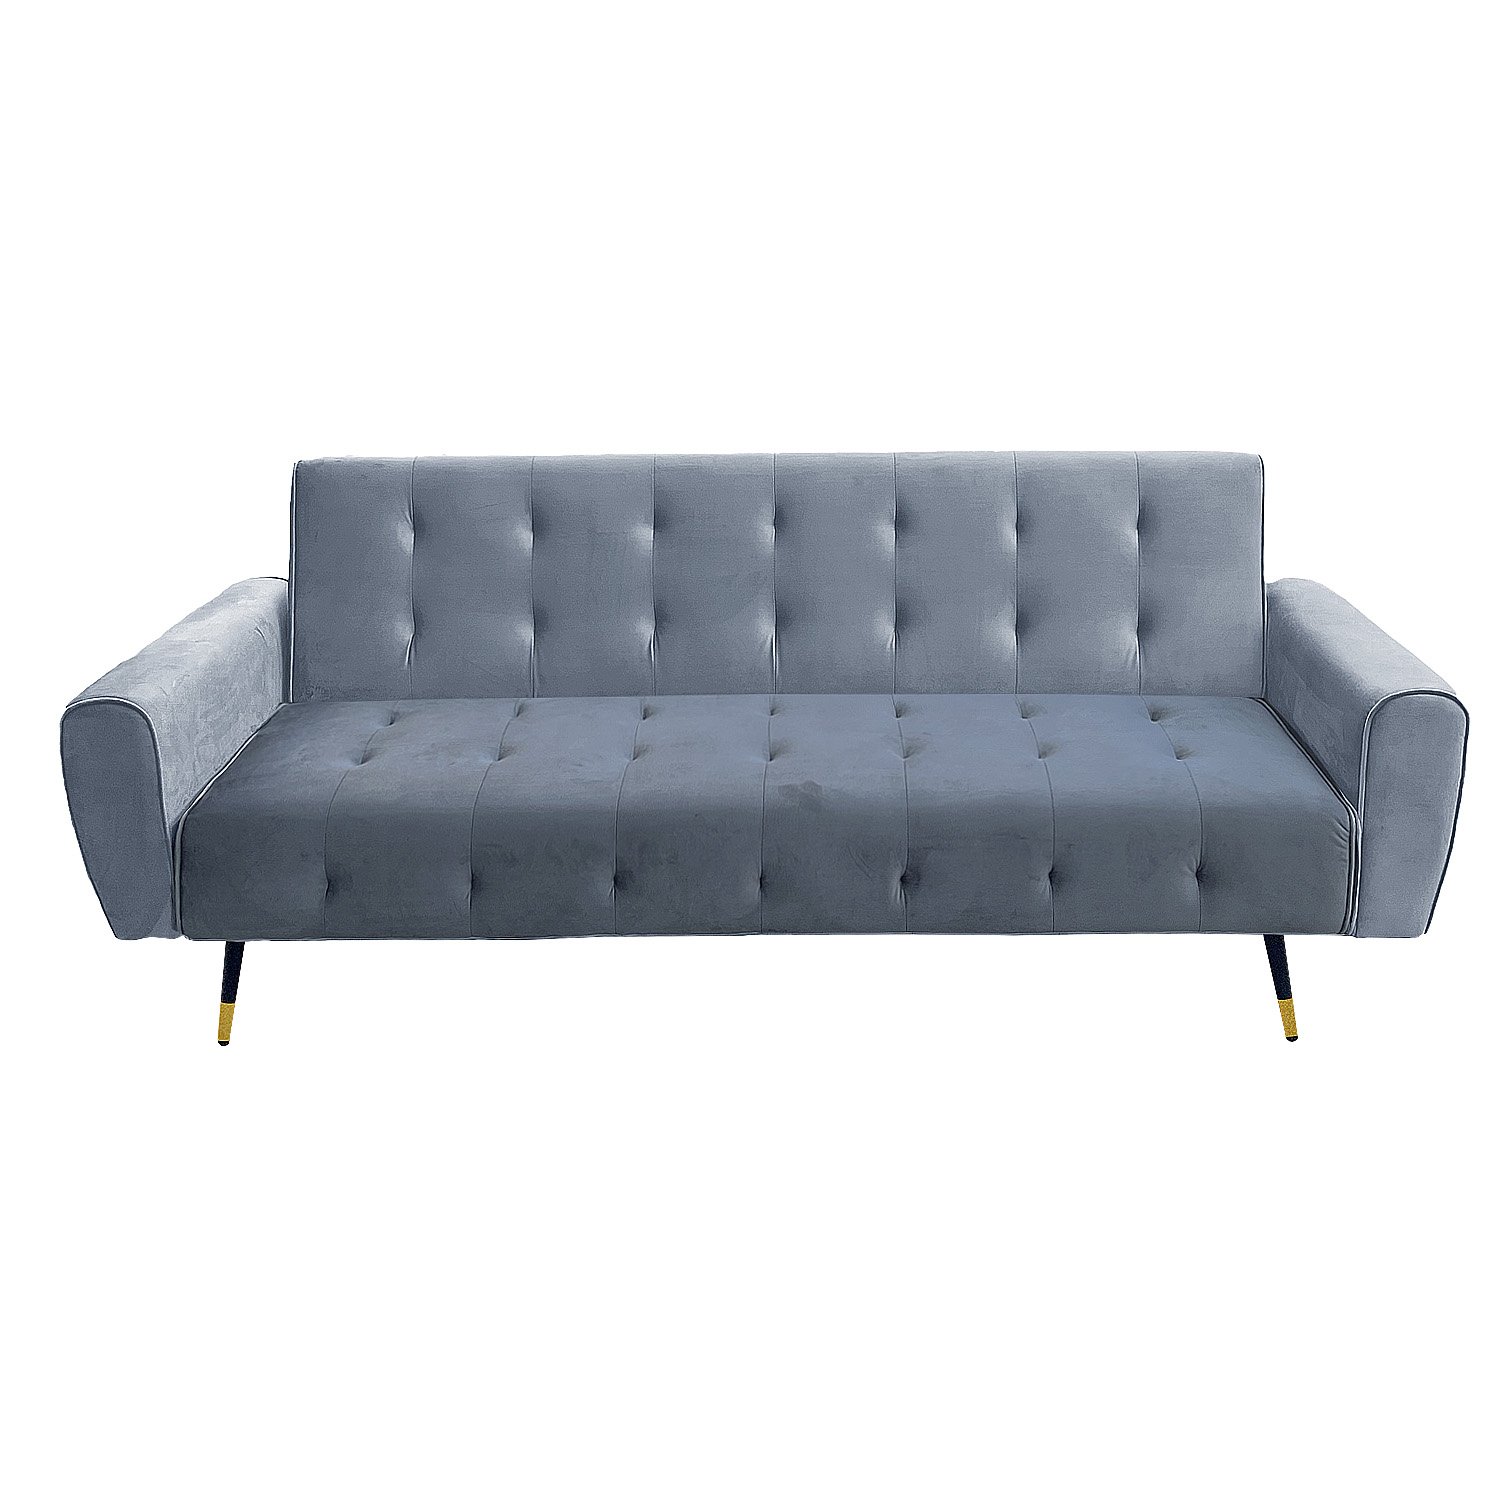 Ava Tufted Velvet Sofa Bed by Sarantino - Light Grey 2